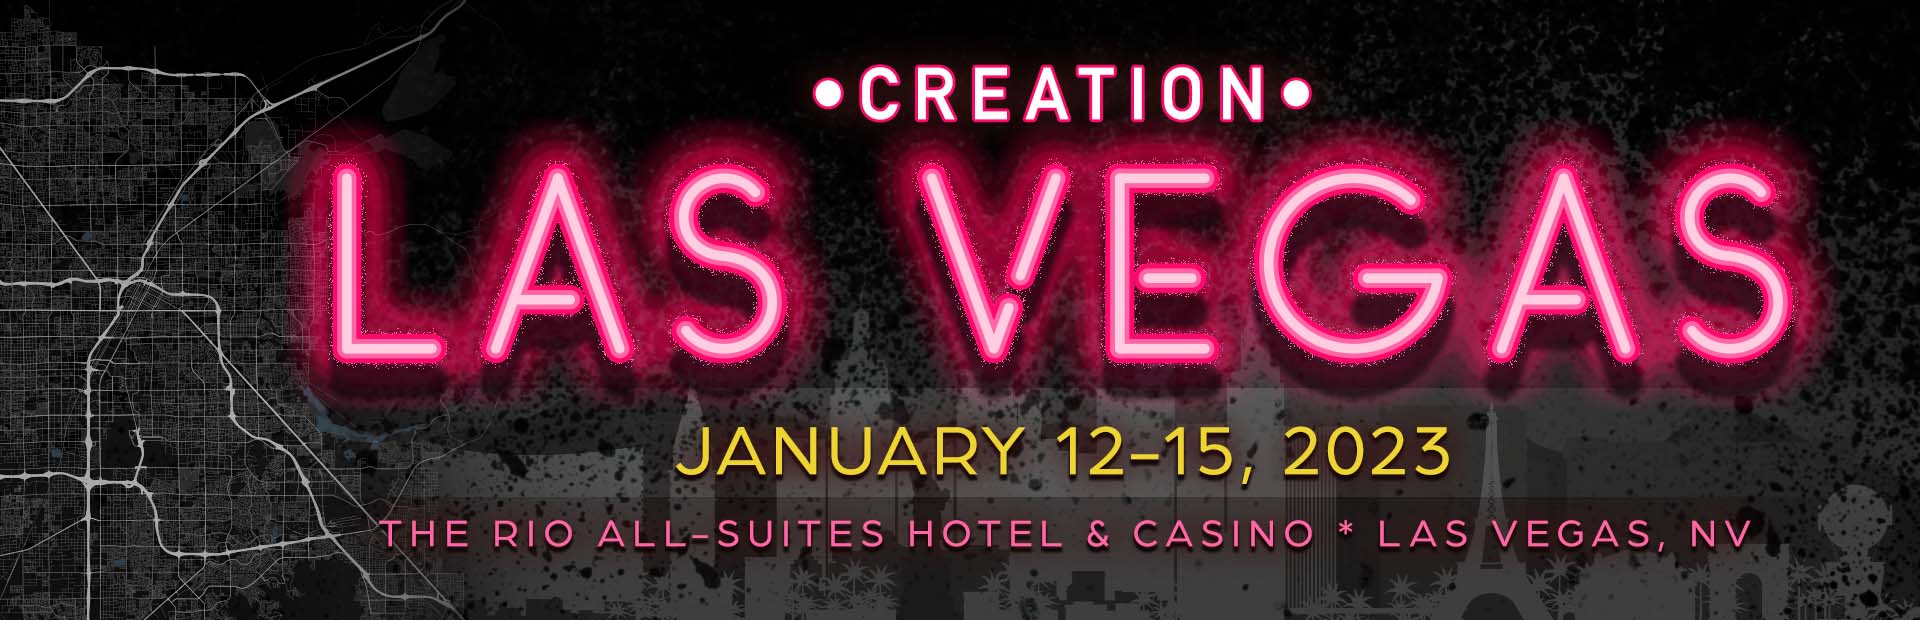 Creation Las Vegas, NV Home